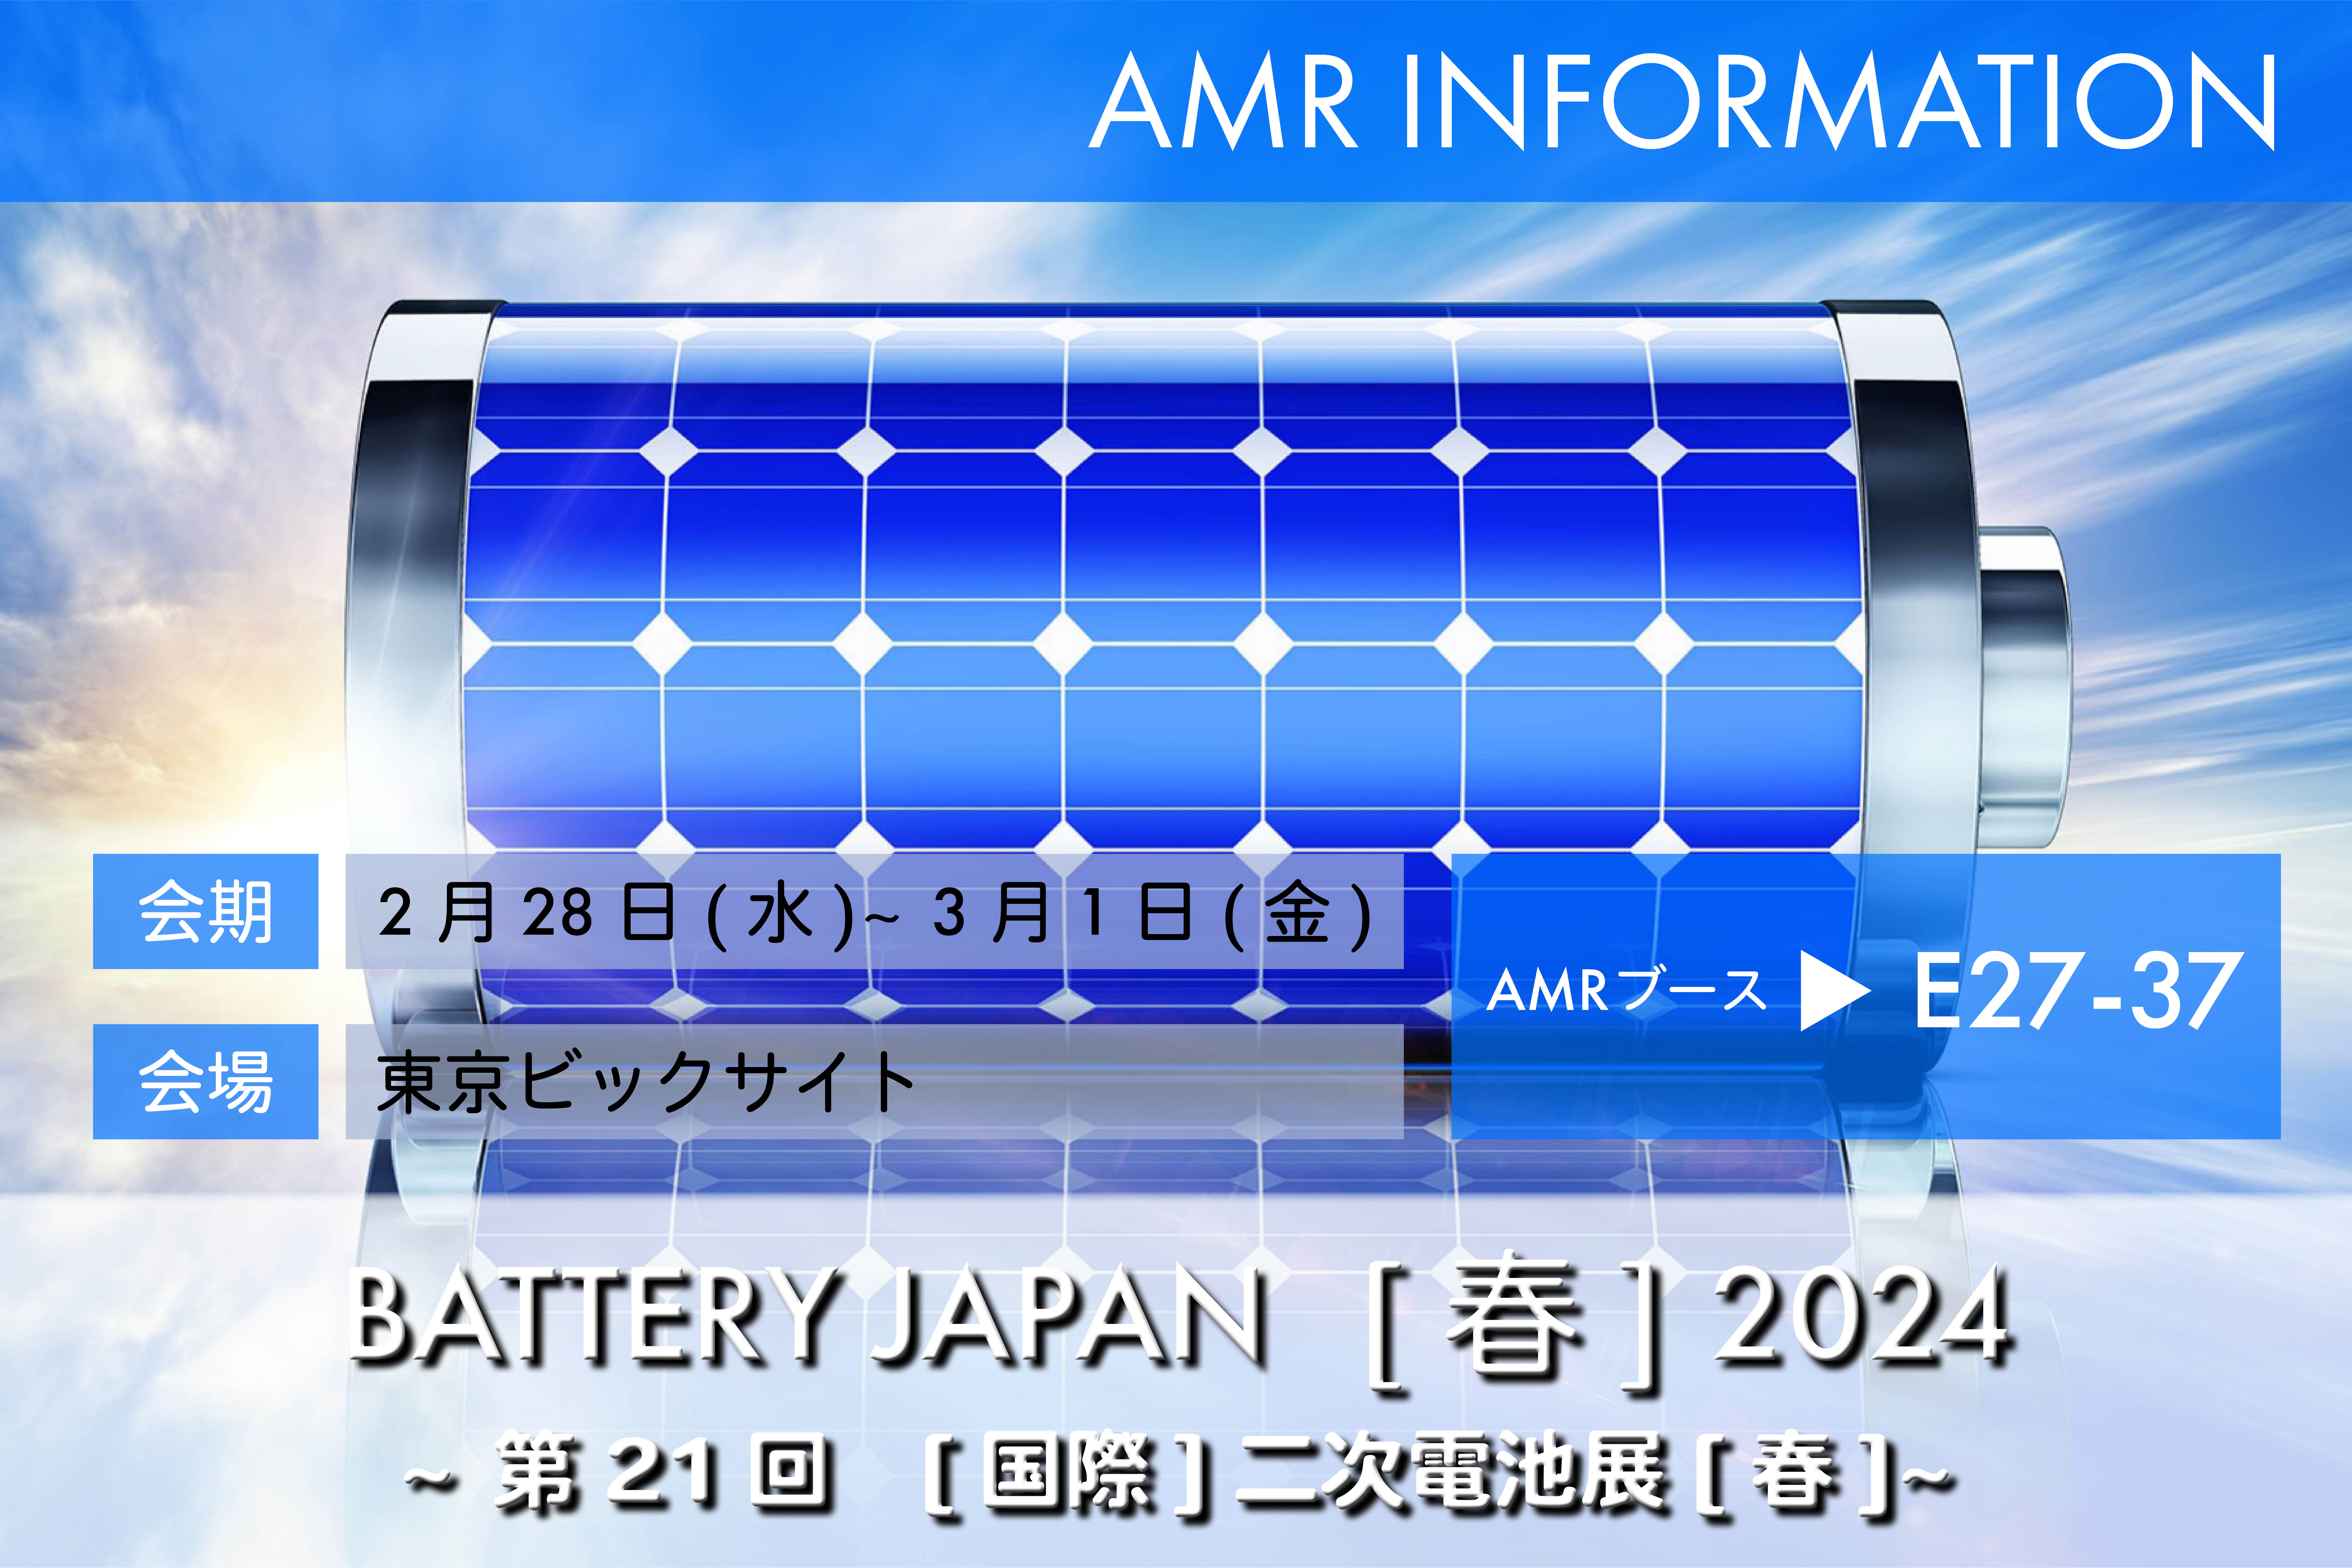 BATTERY JAPAN 【国際】二次電池展　出展のお知らせ